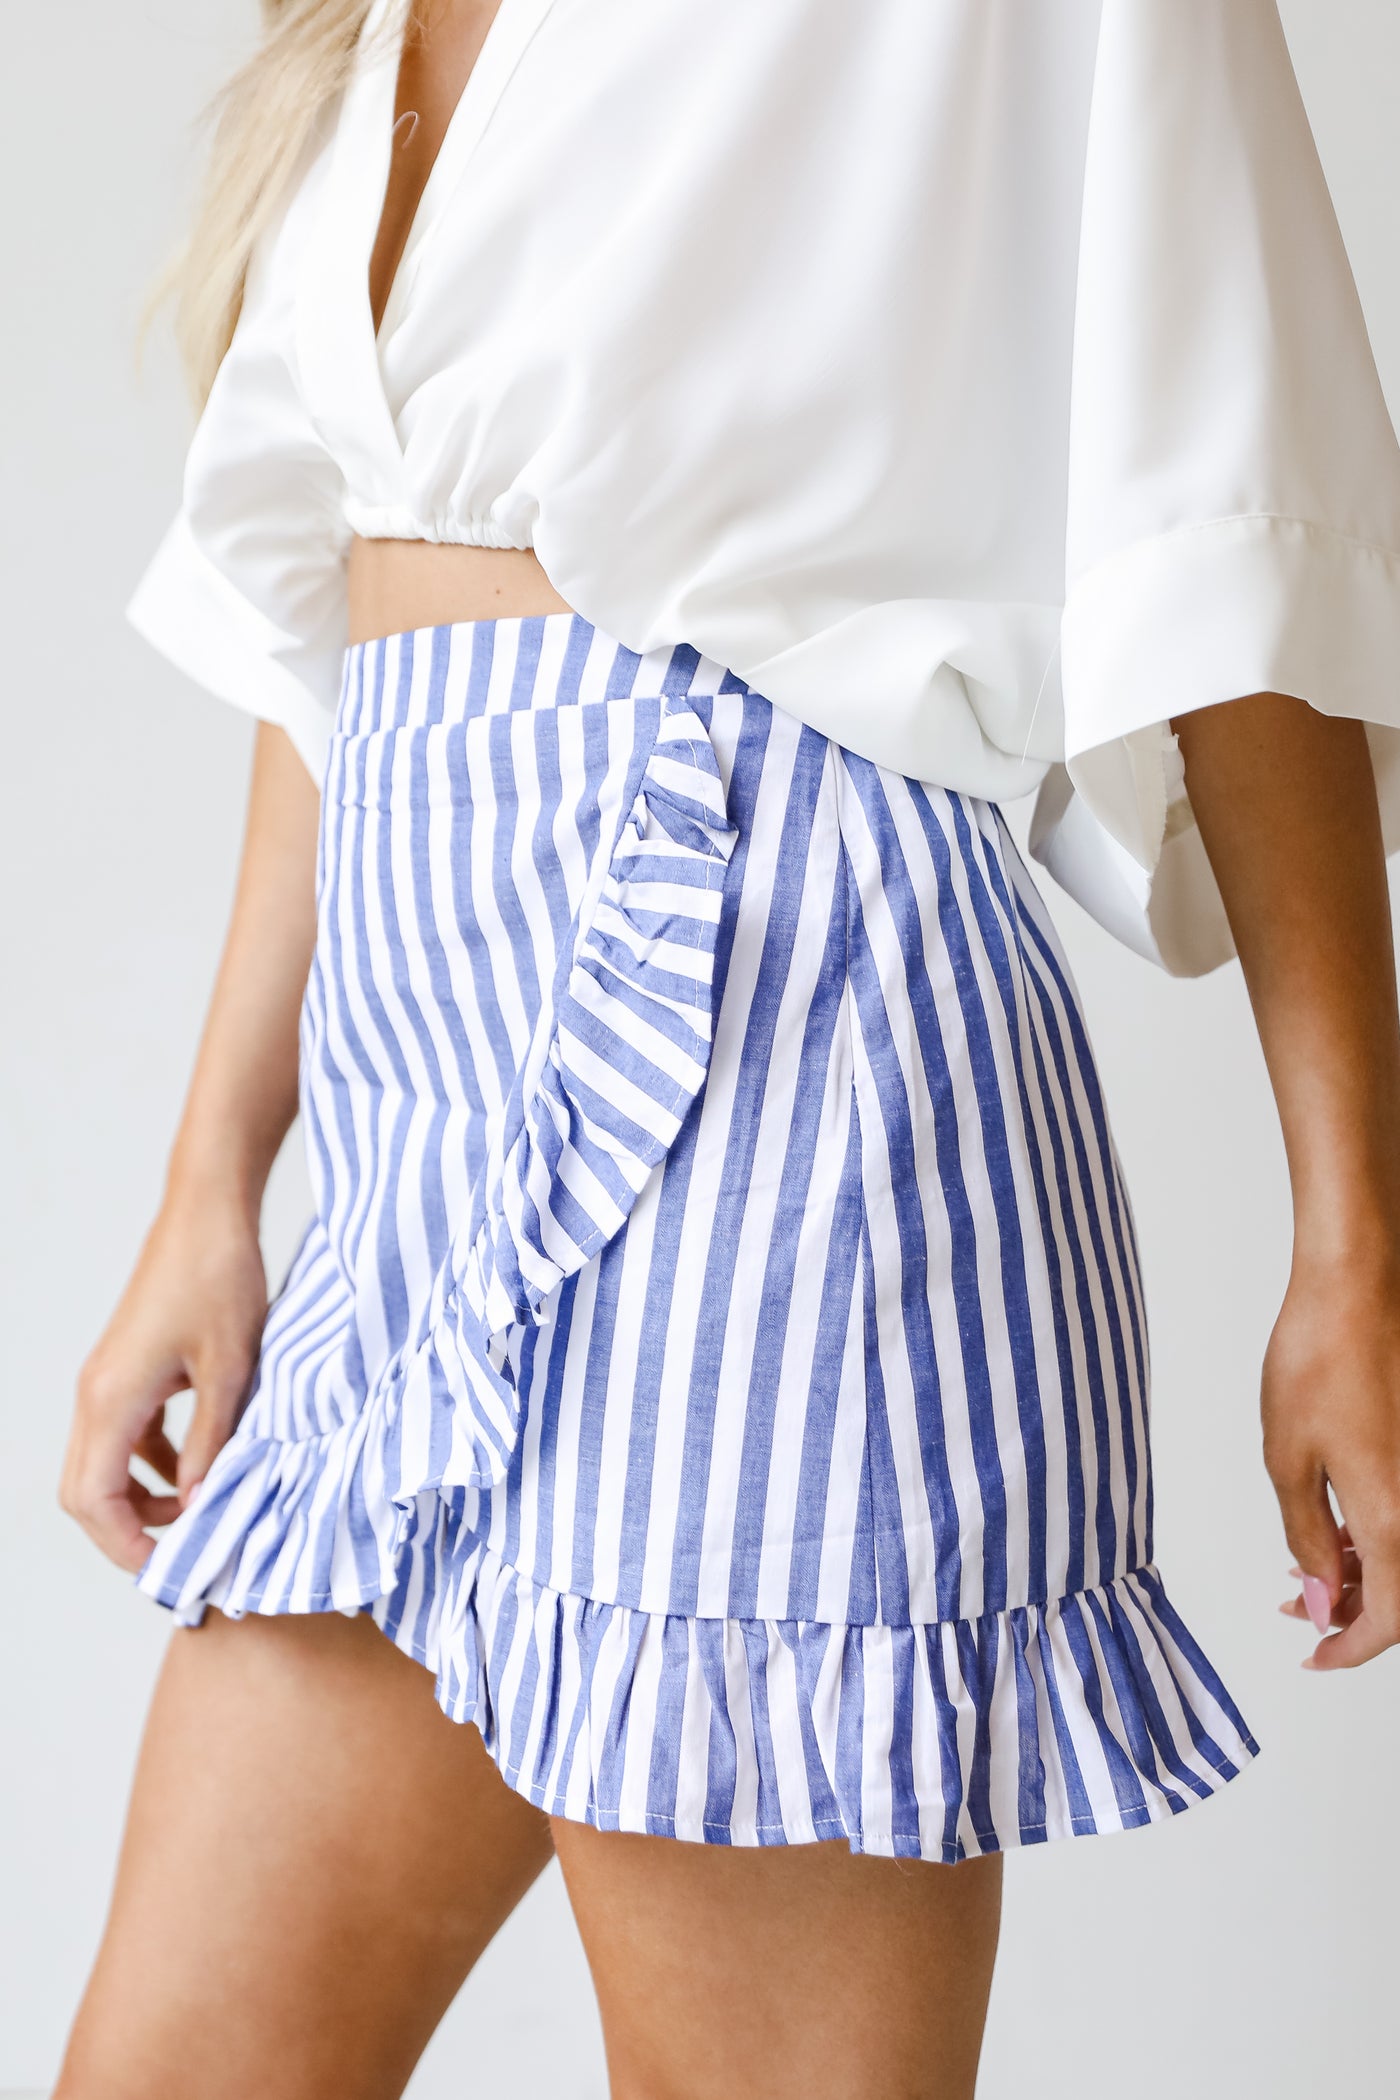 Striped Ruffle Mini Skirt side view